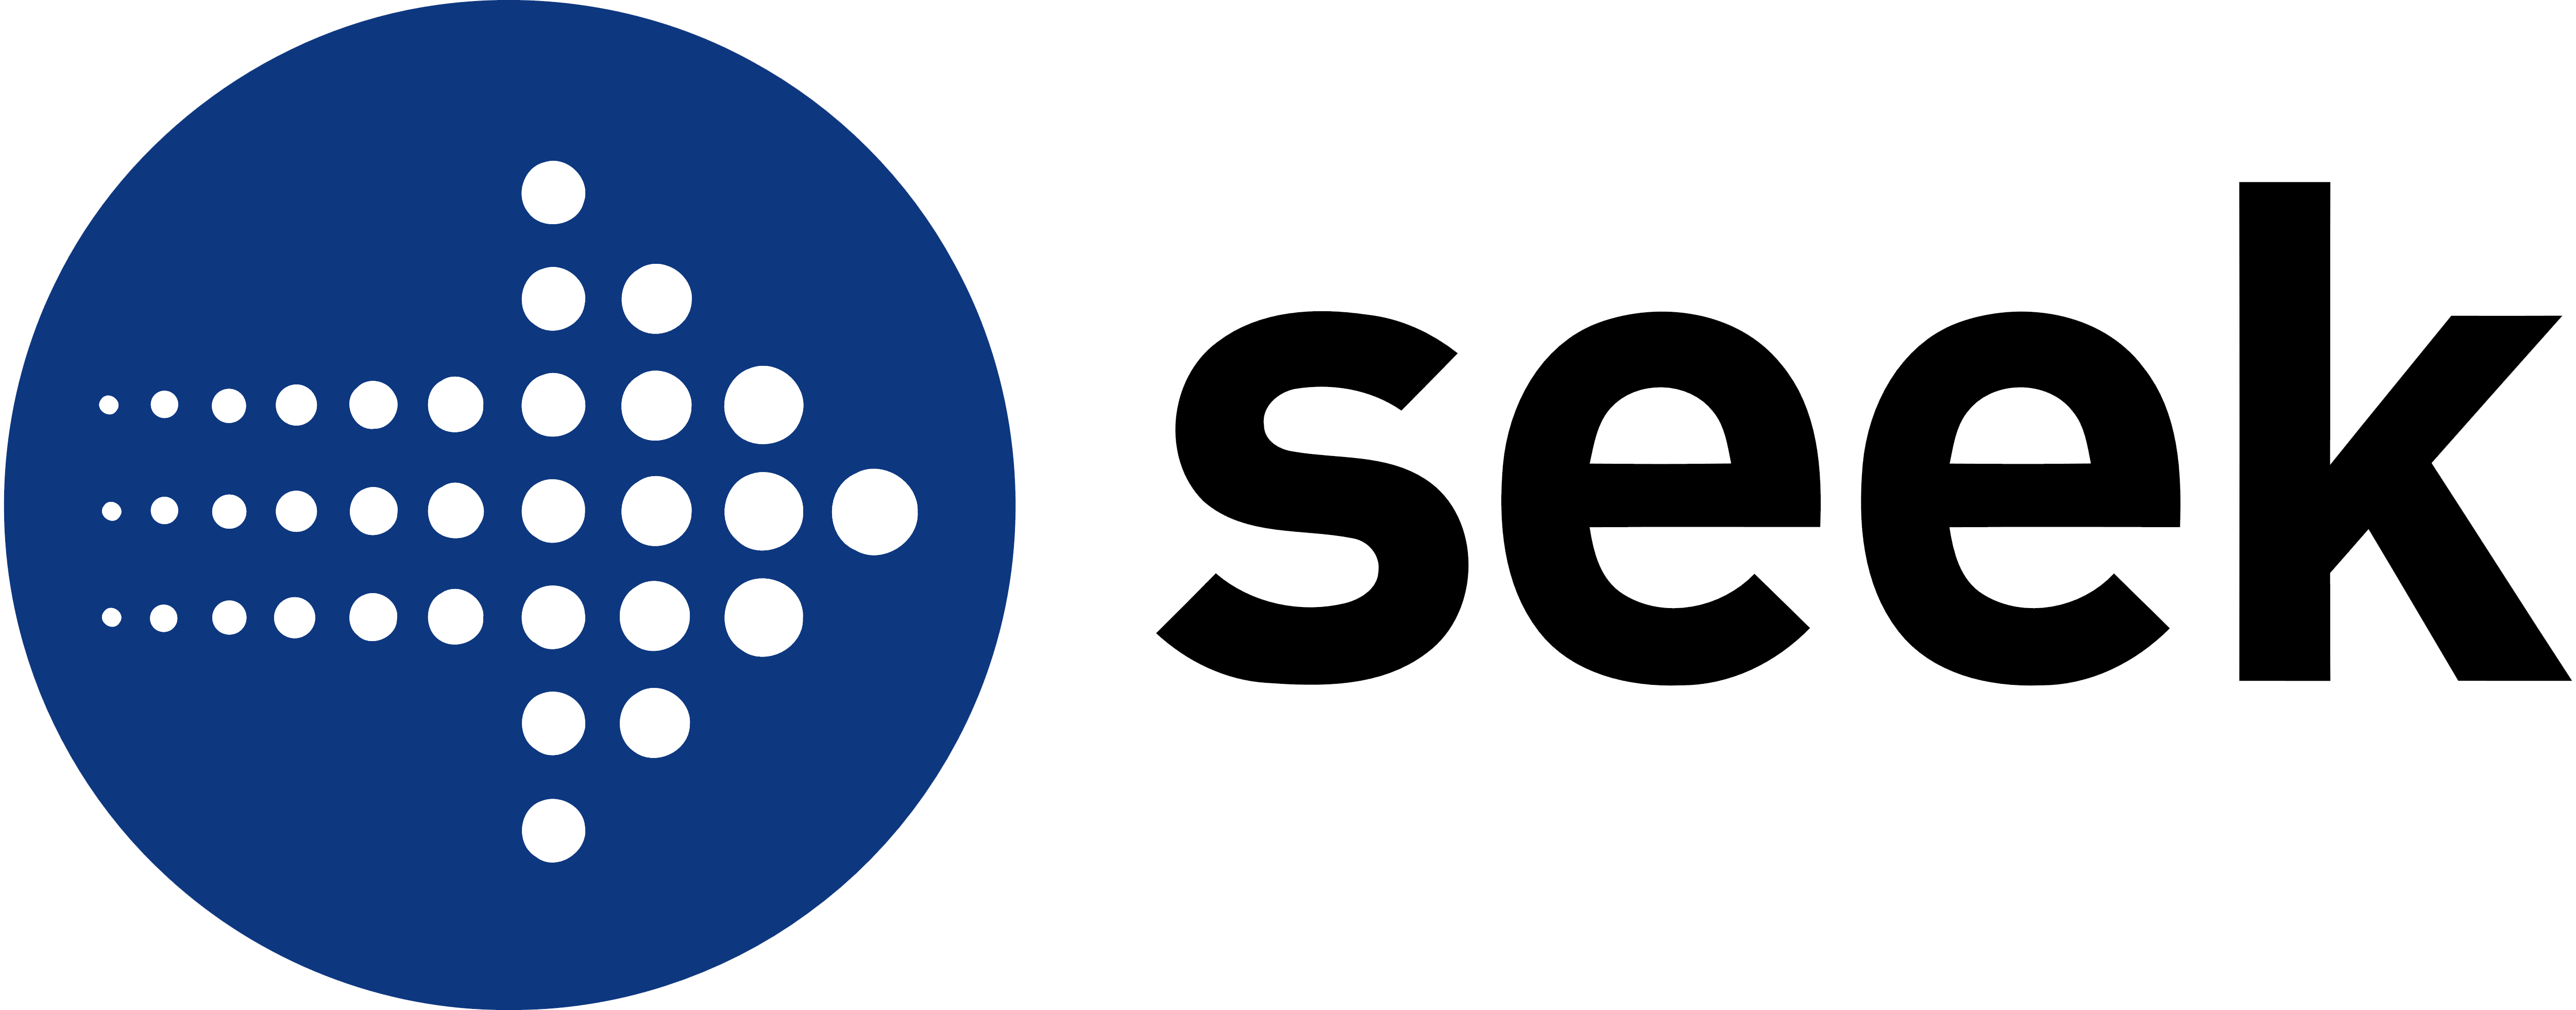 Seek Logo - Seek.com.au – Logos Download